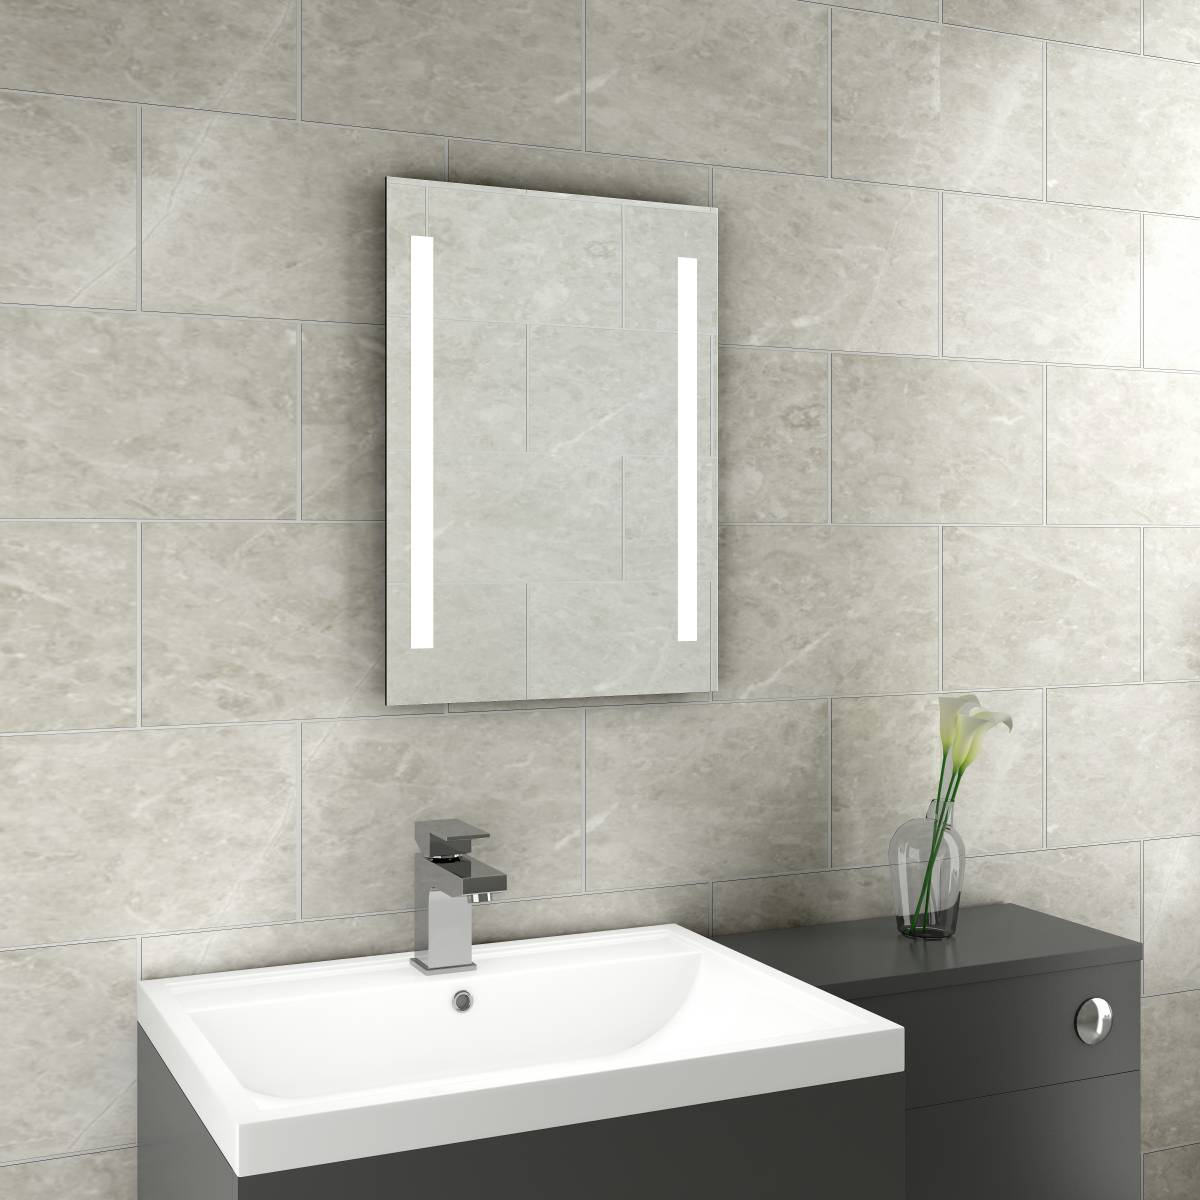 Aquariss 700 x 500mm Illuminated LED Bathroom Mirror with Demister IP44 